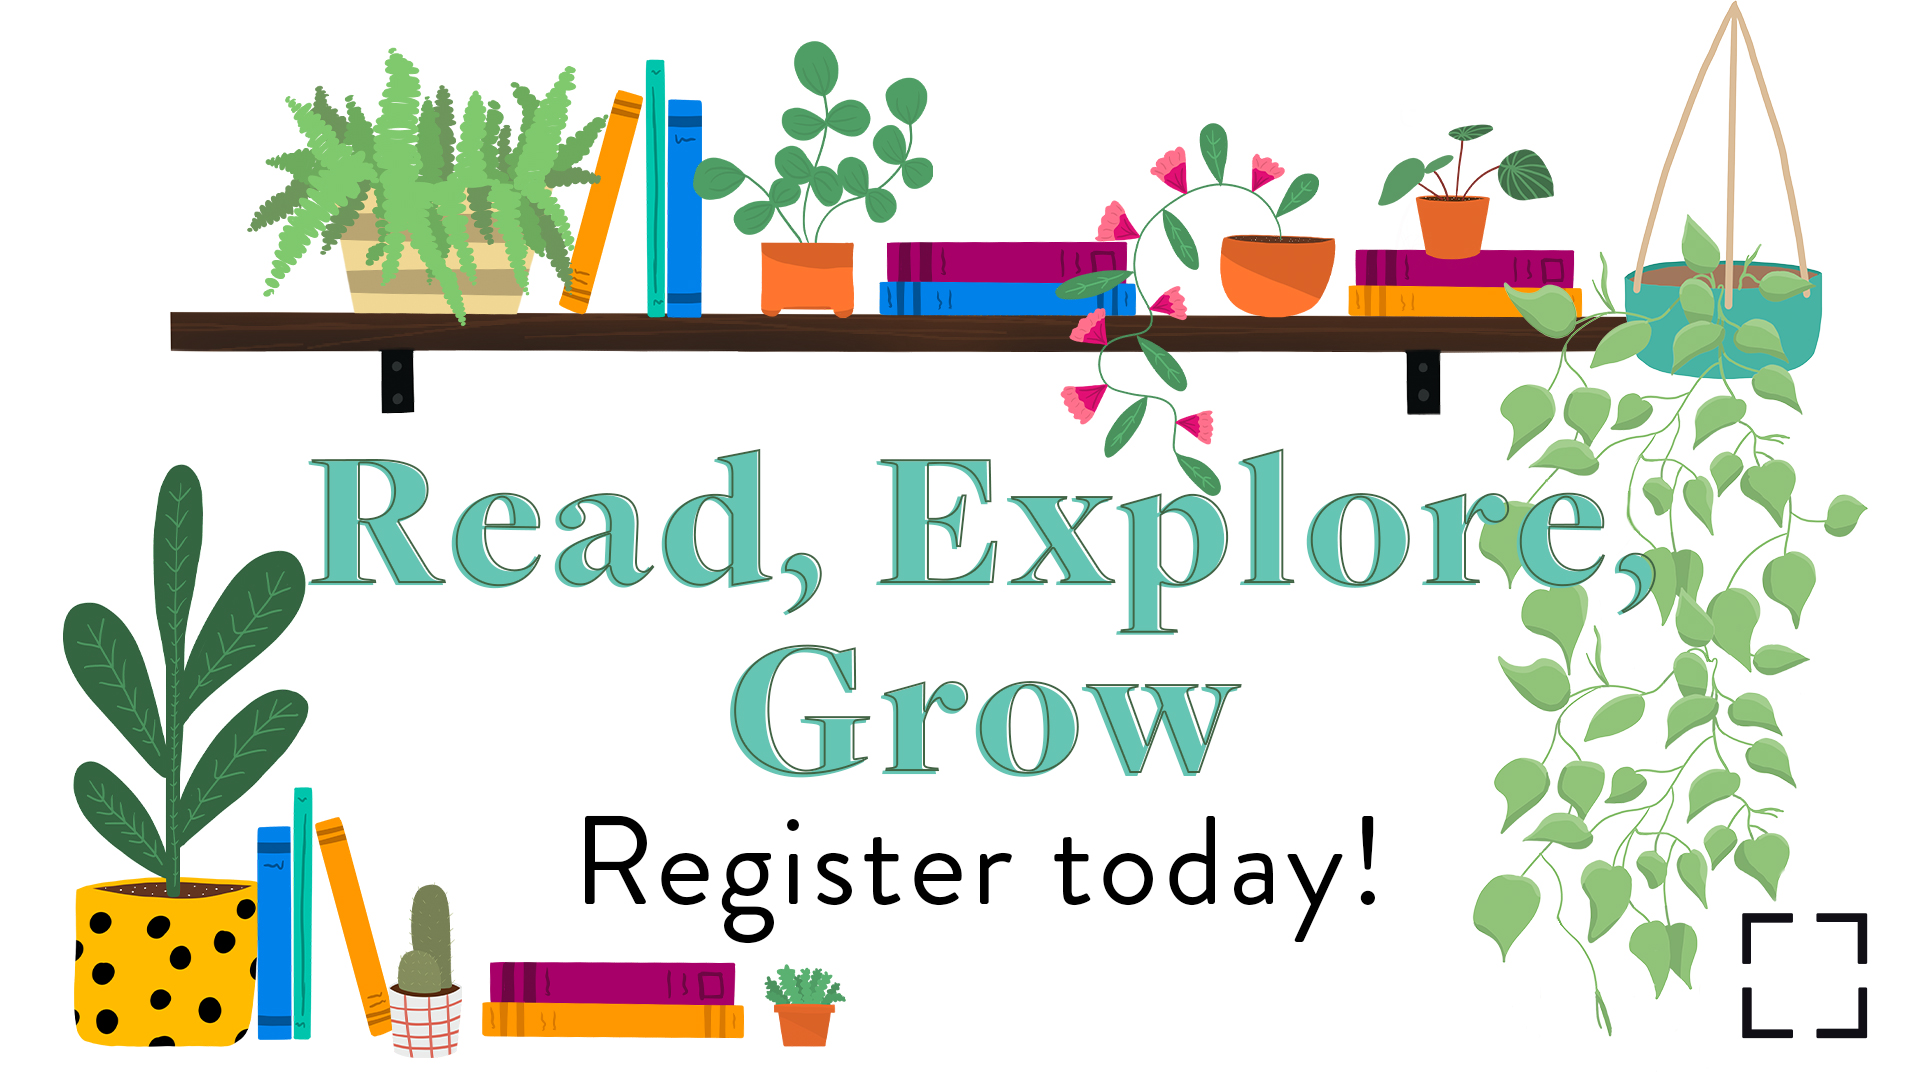 Read, Explore, Grow - EVPL's Annual Reading Challenge